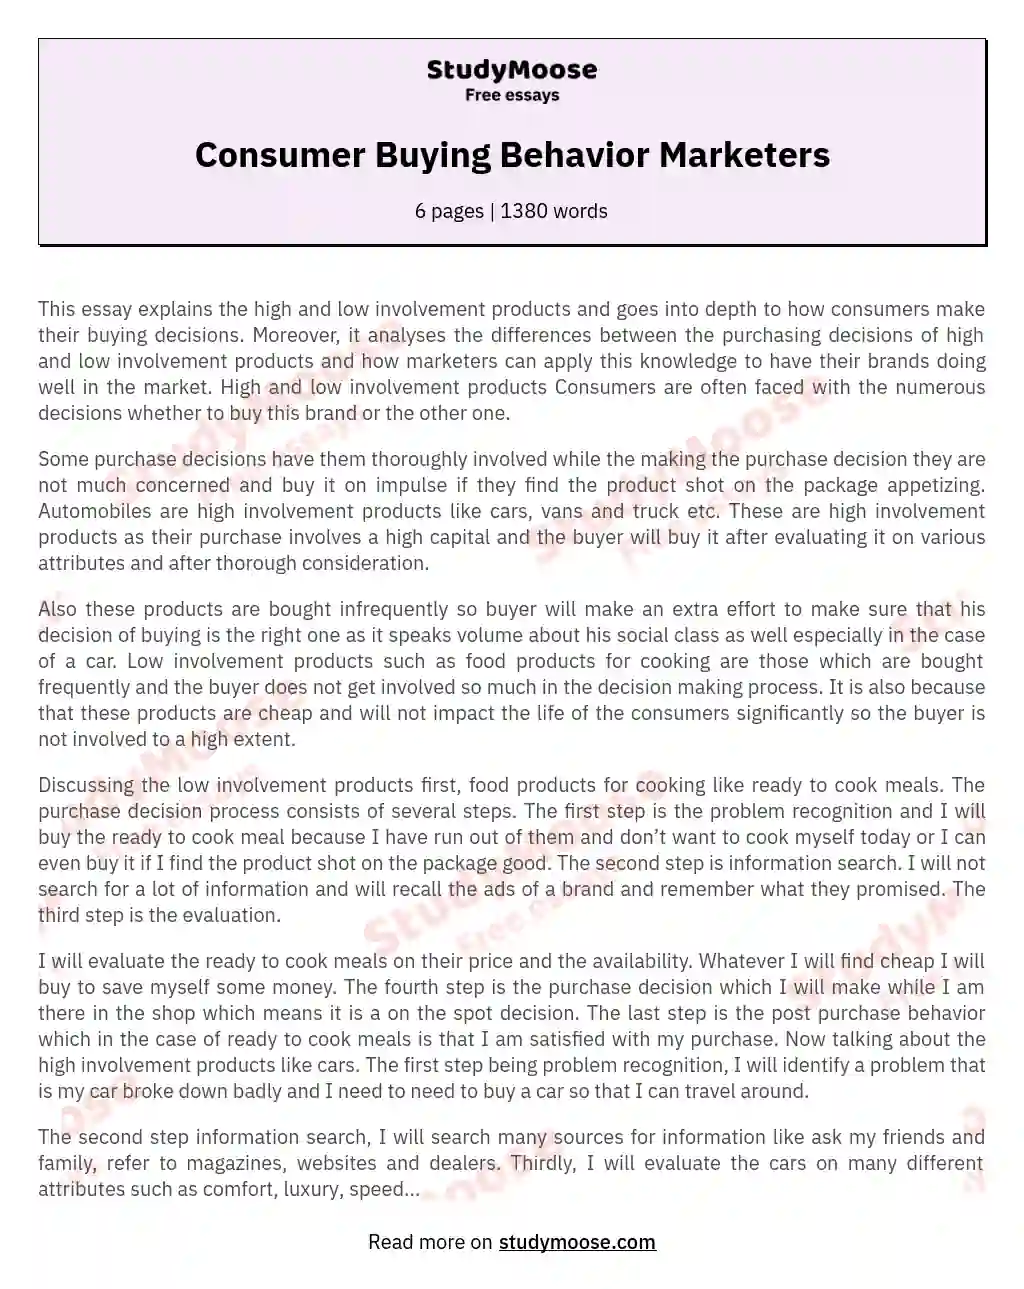 Consumer Buying Behavior Marketers